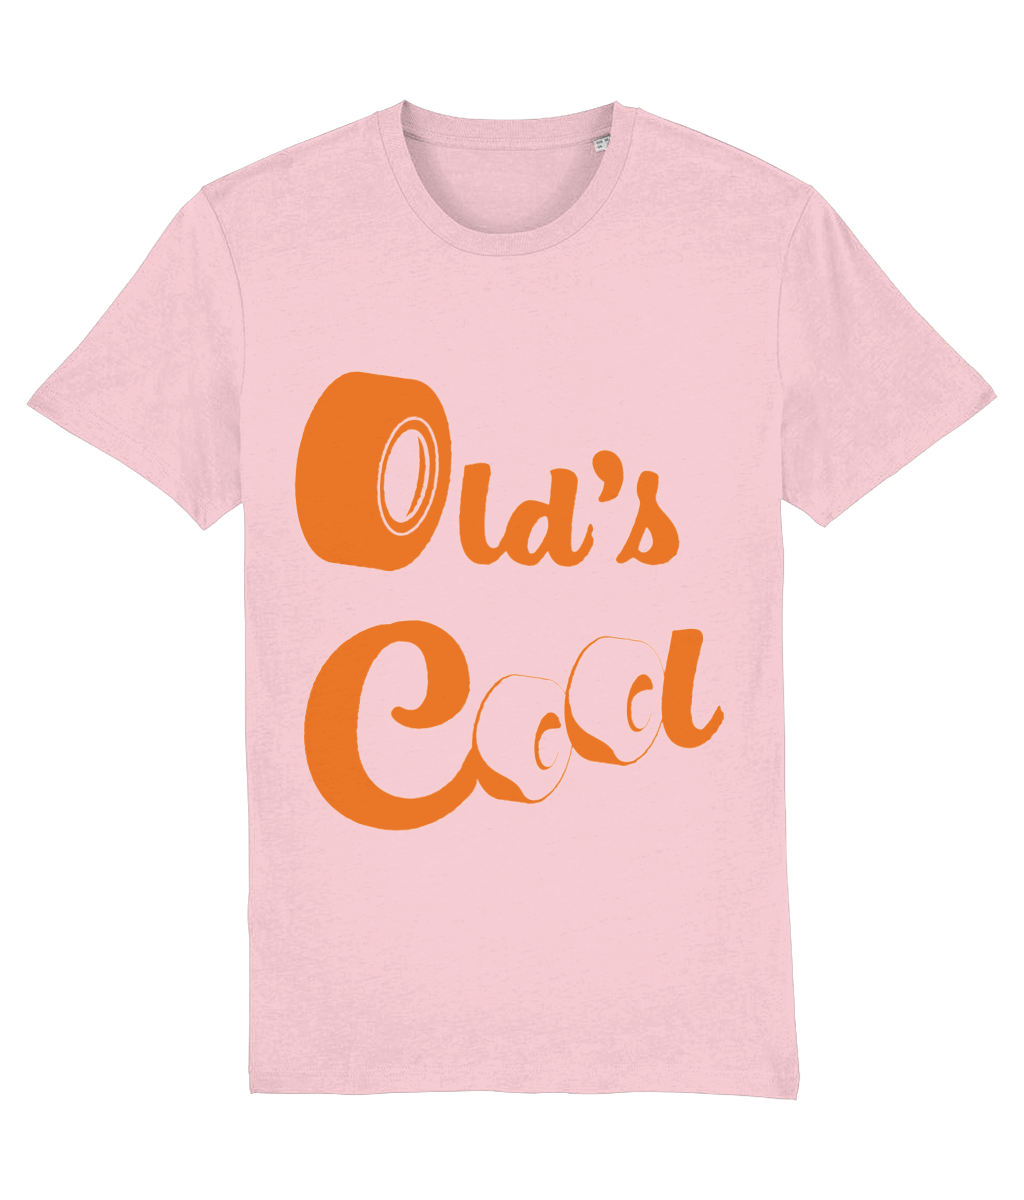 Tshirt Oldscool Orange